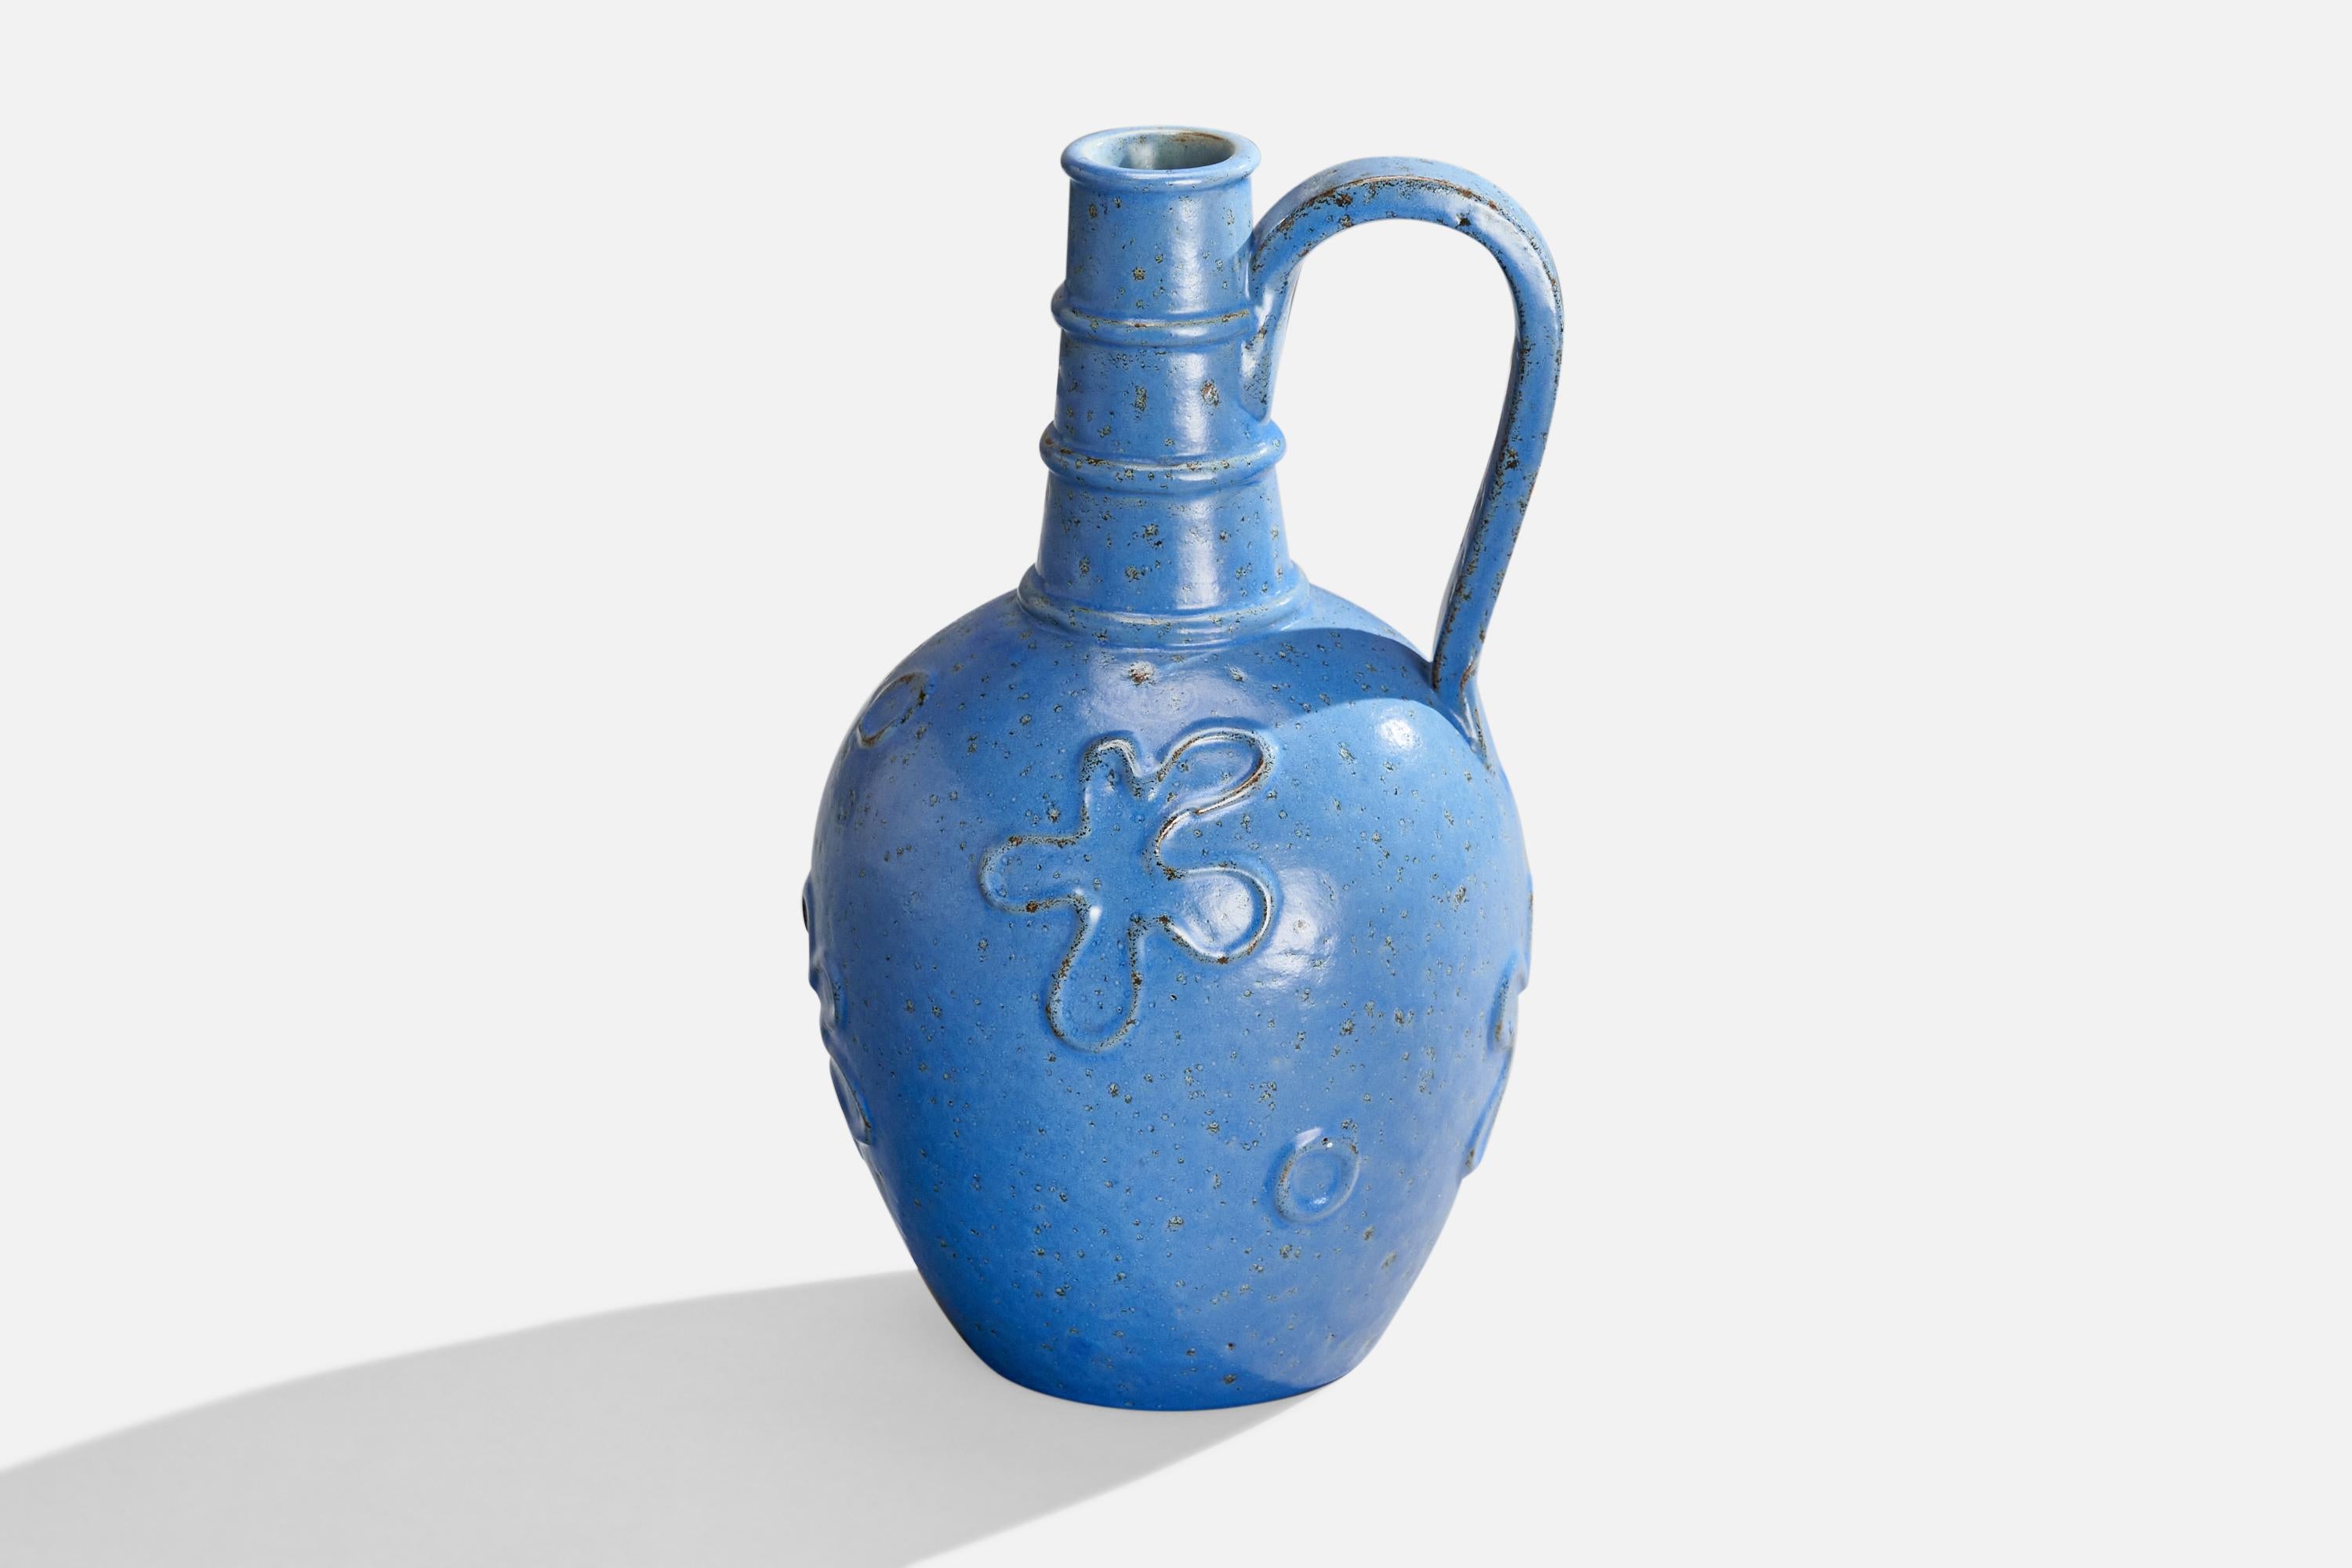 A blue-glazed ceramic pitcher designed and produced by Nittsjö, Sweden, 1930s.